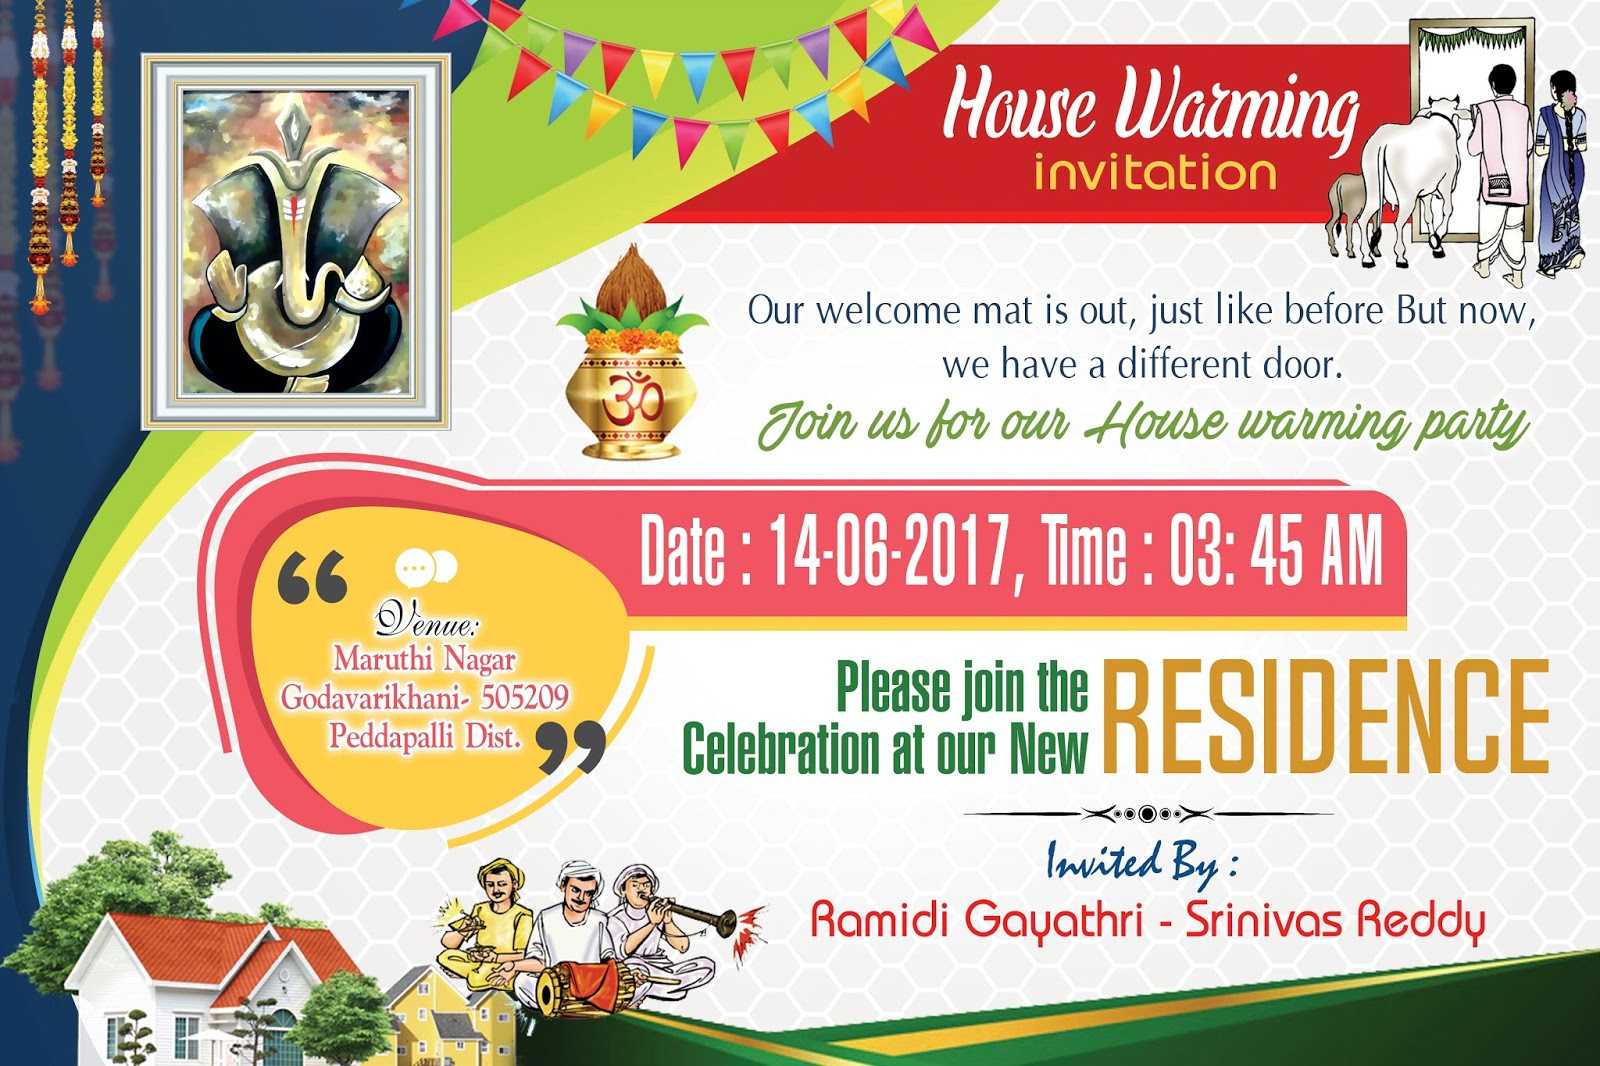 Housewarming Invitation Card Psd Template Free Download With Free Housewarming Invitation Card Template